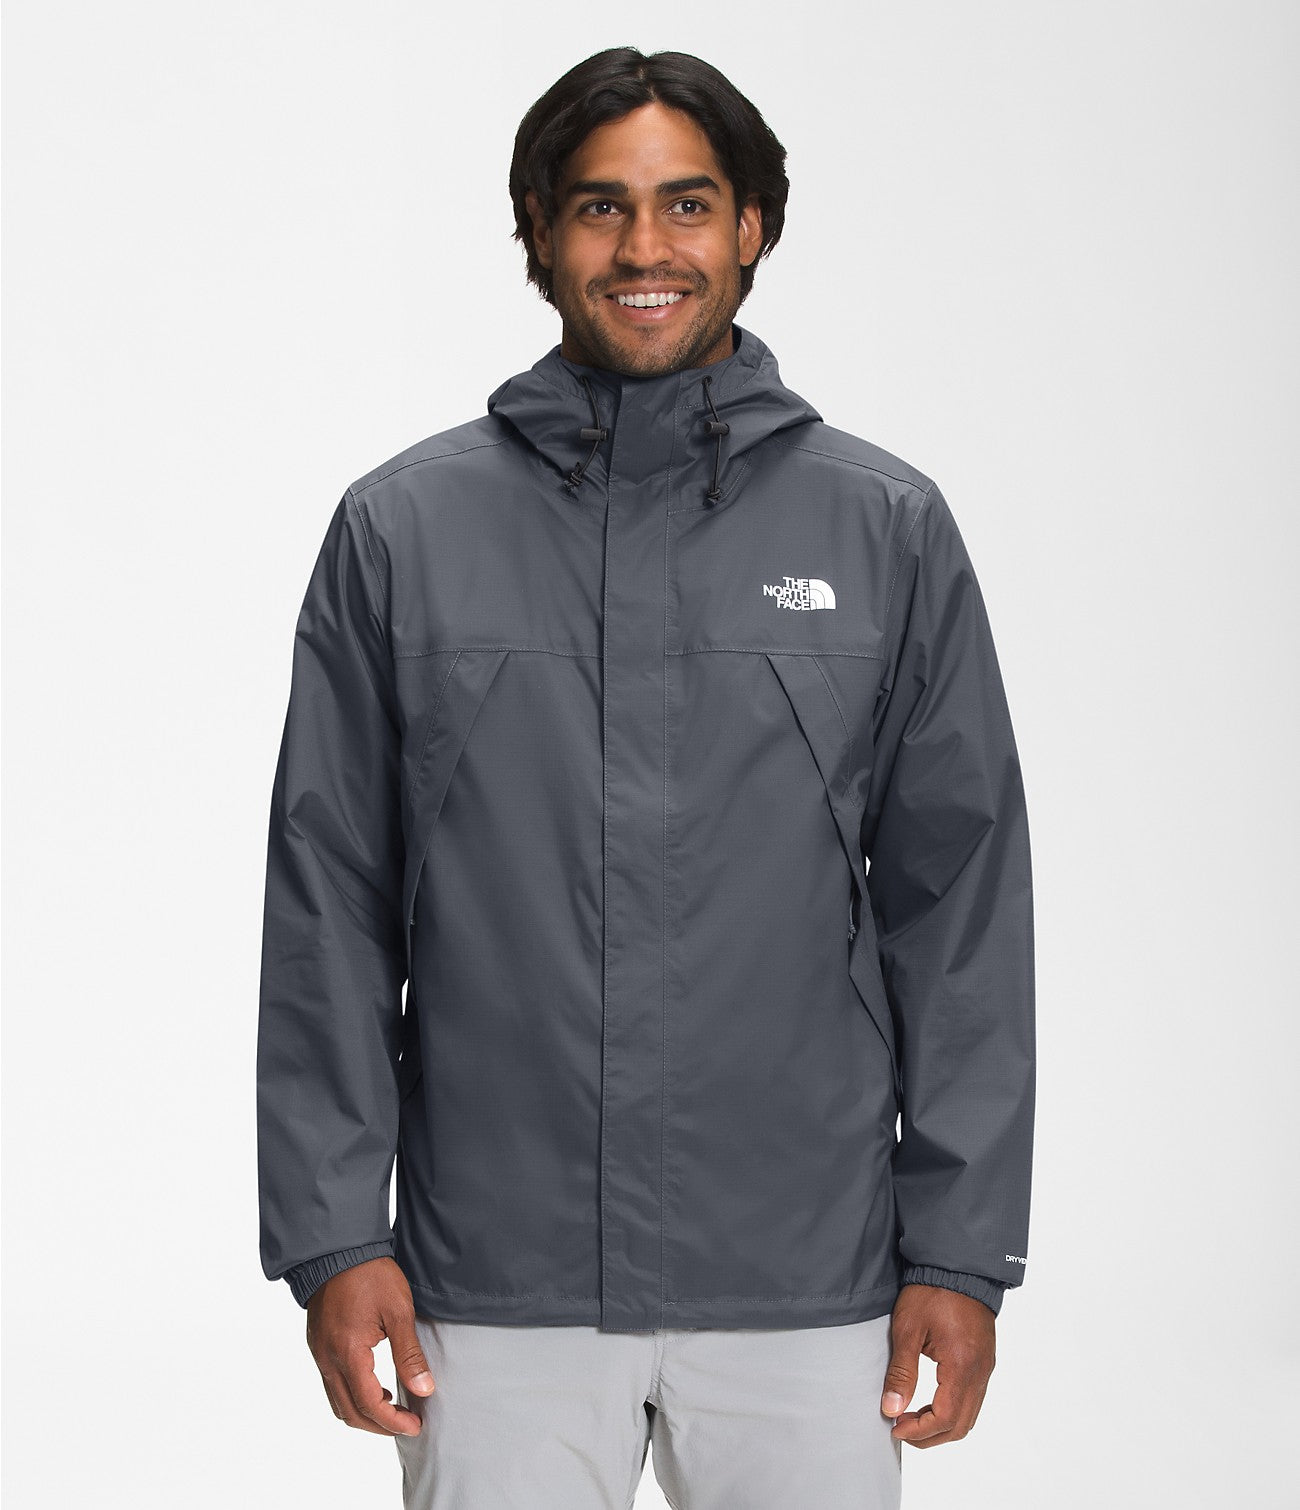 The North Face Men's Antora Jacket Apparel North Face Small Vanadis Grey 